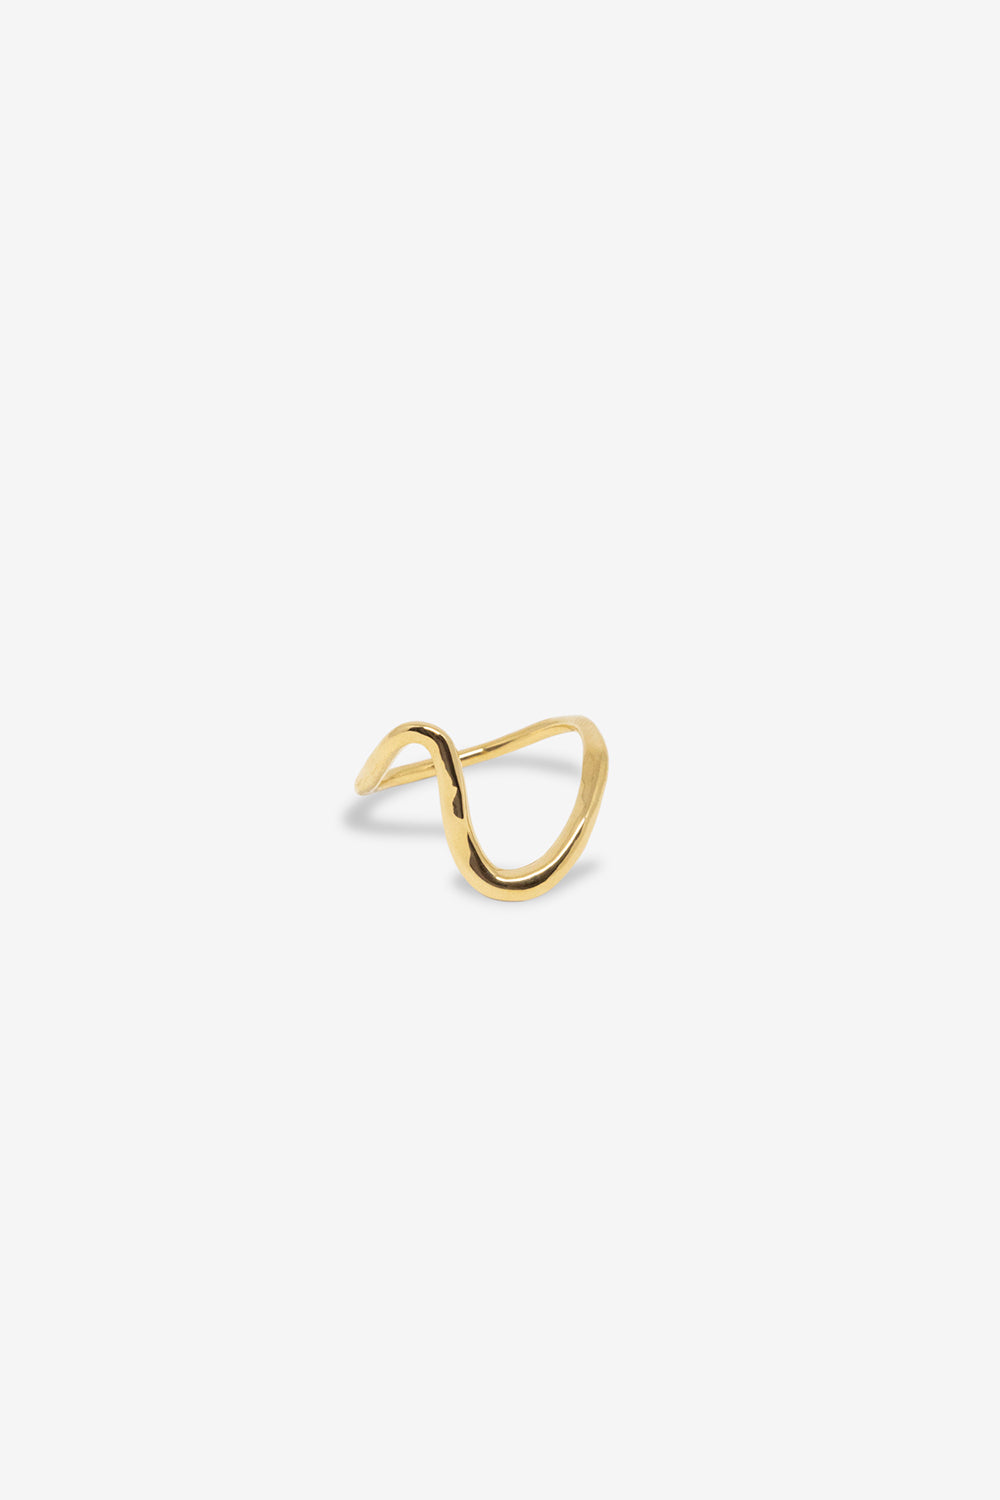 Swirl Ring - Small - Gold